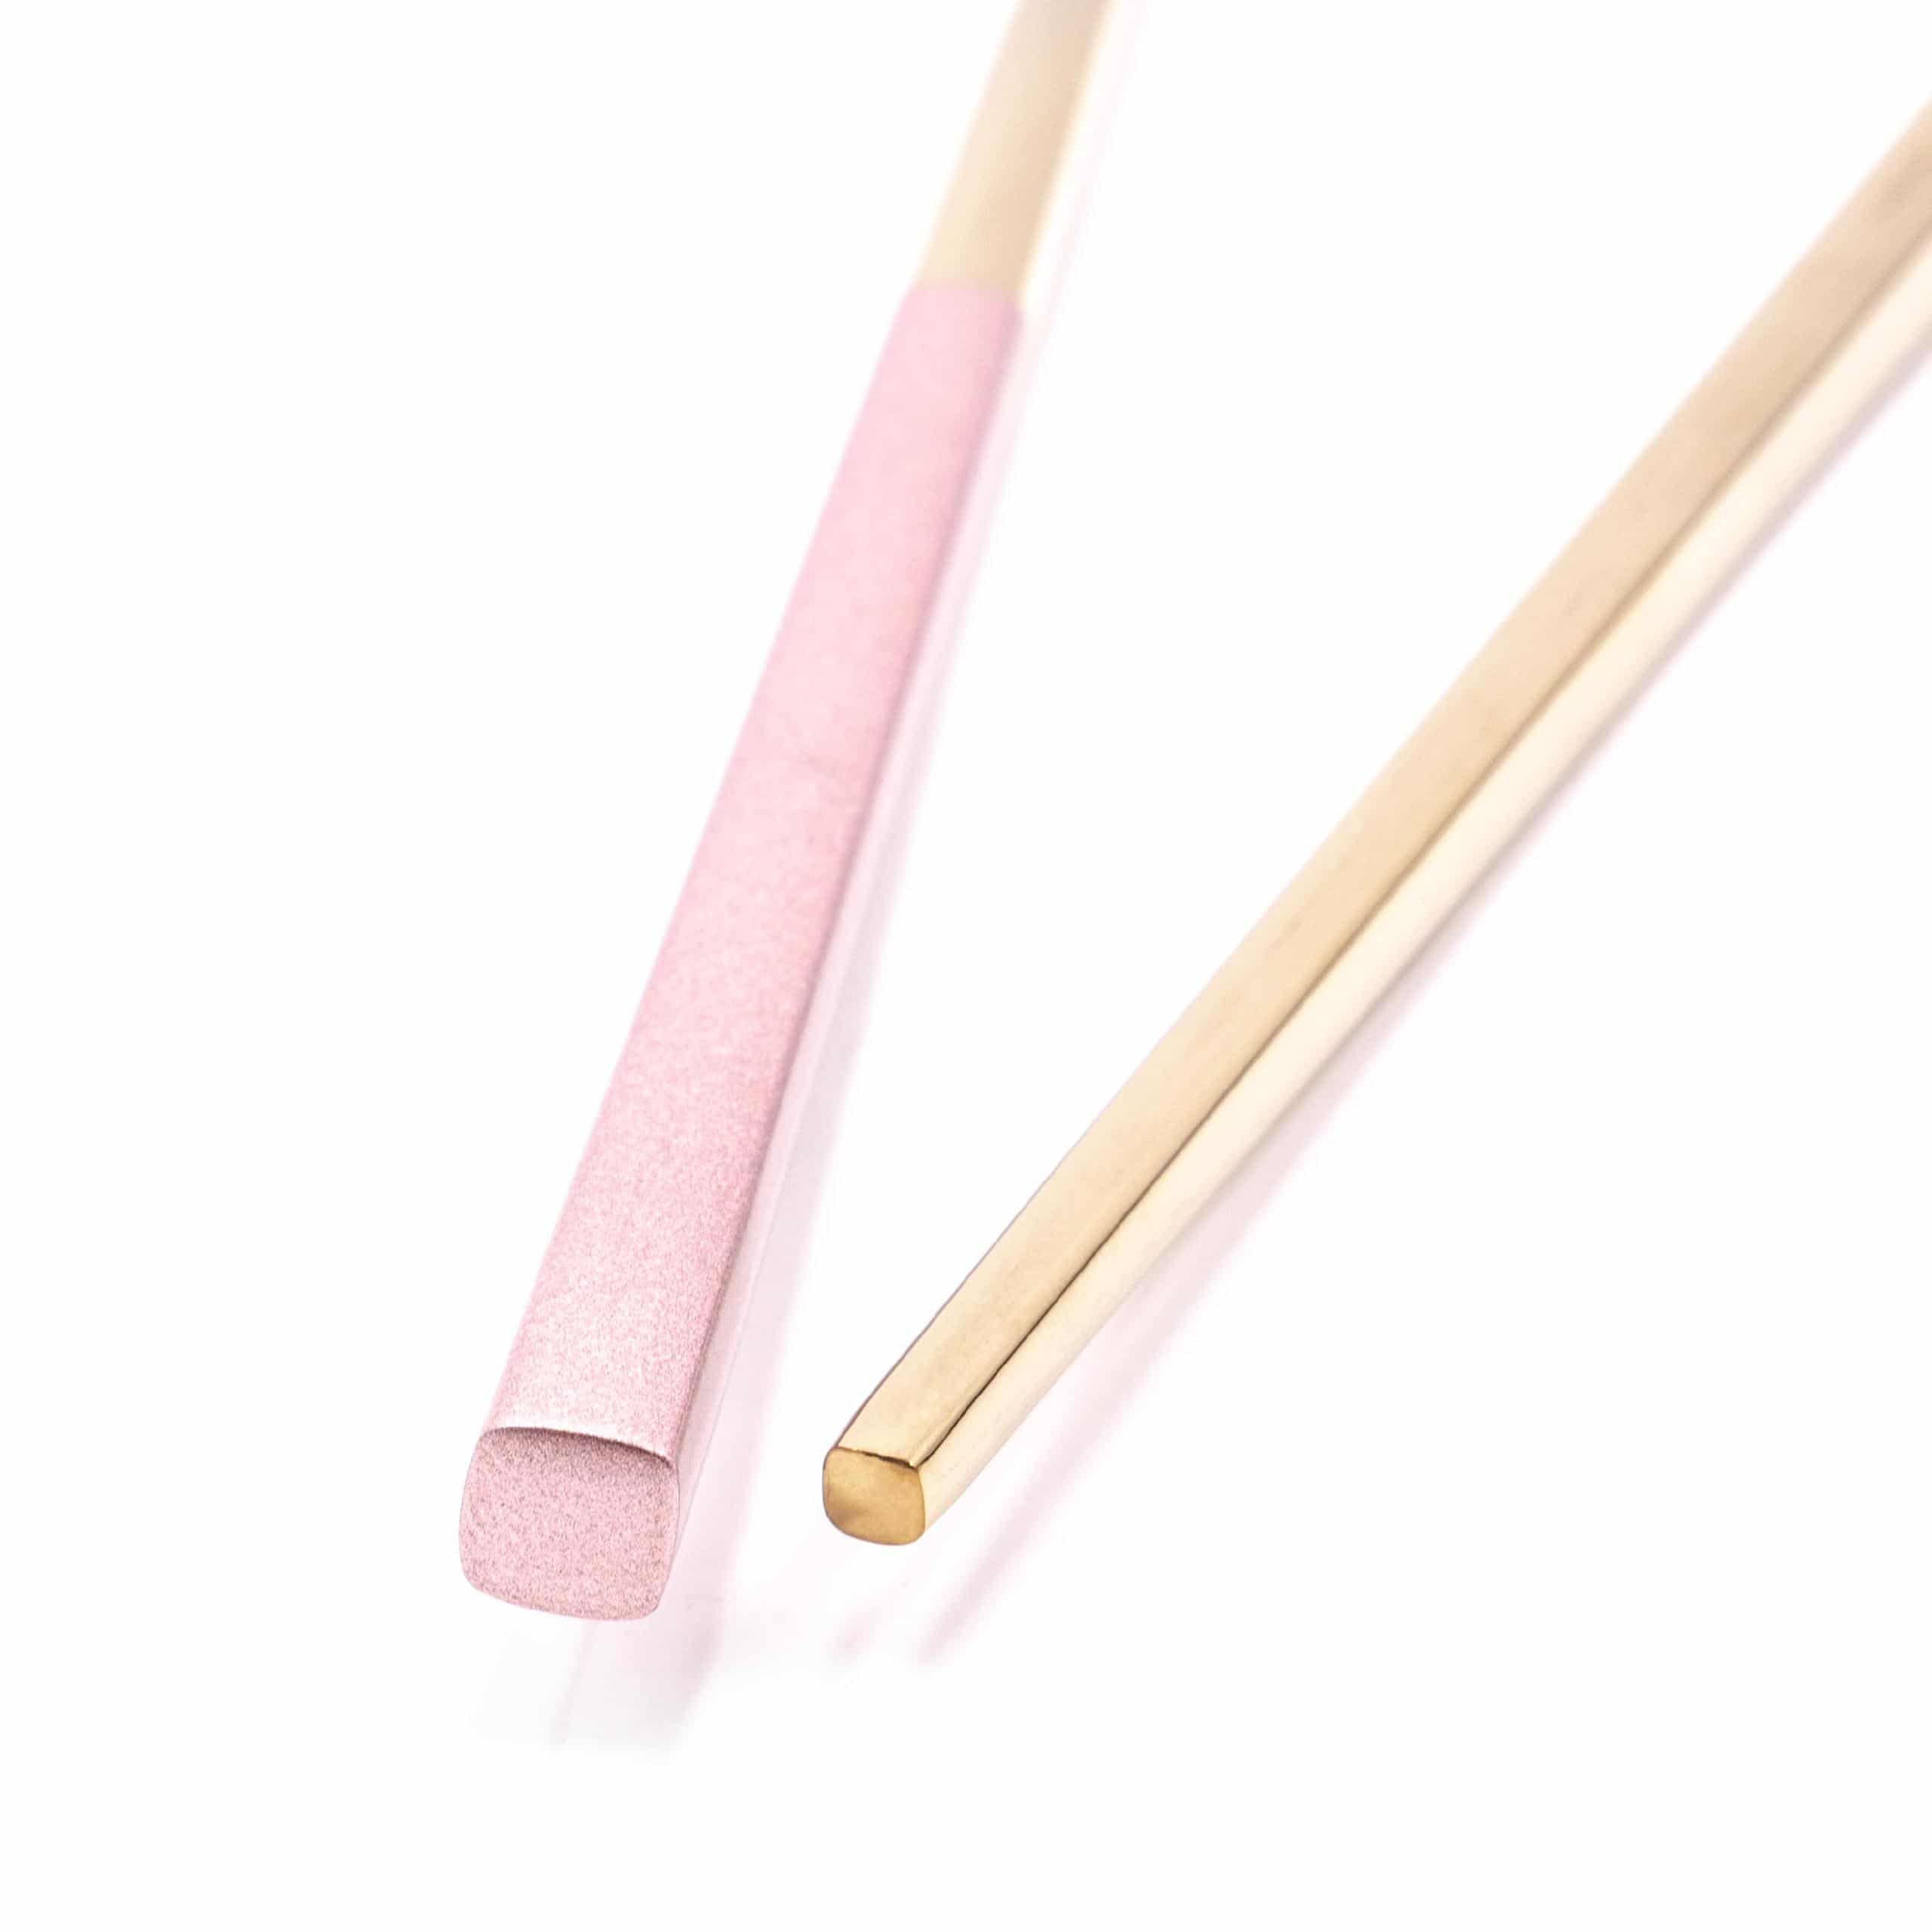 Chopstick Set (1 Pair) - Stainless Steel, gold, pink, 23 cm long, Reusable